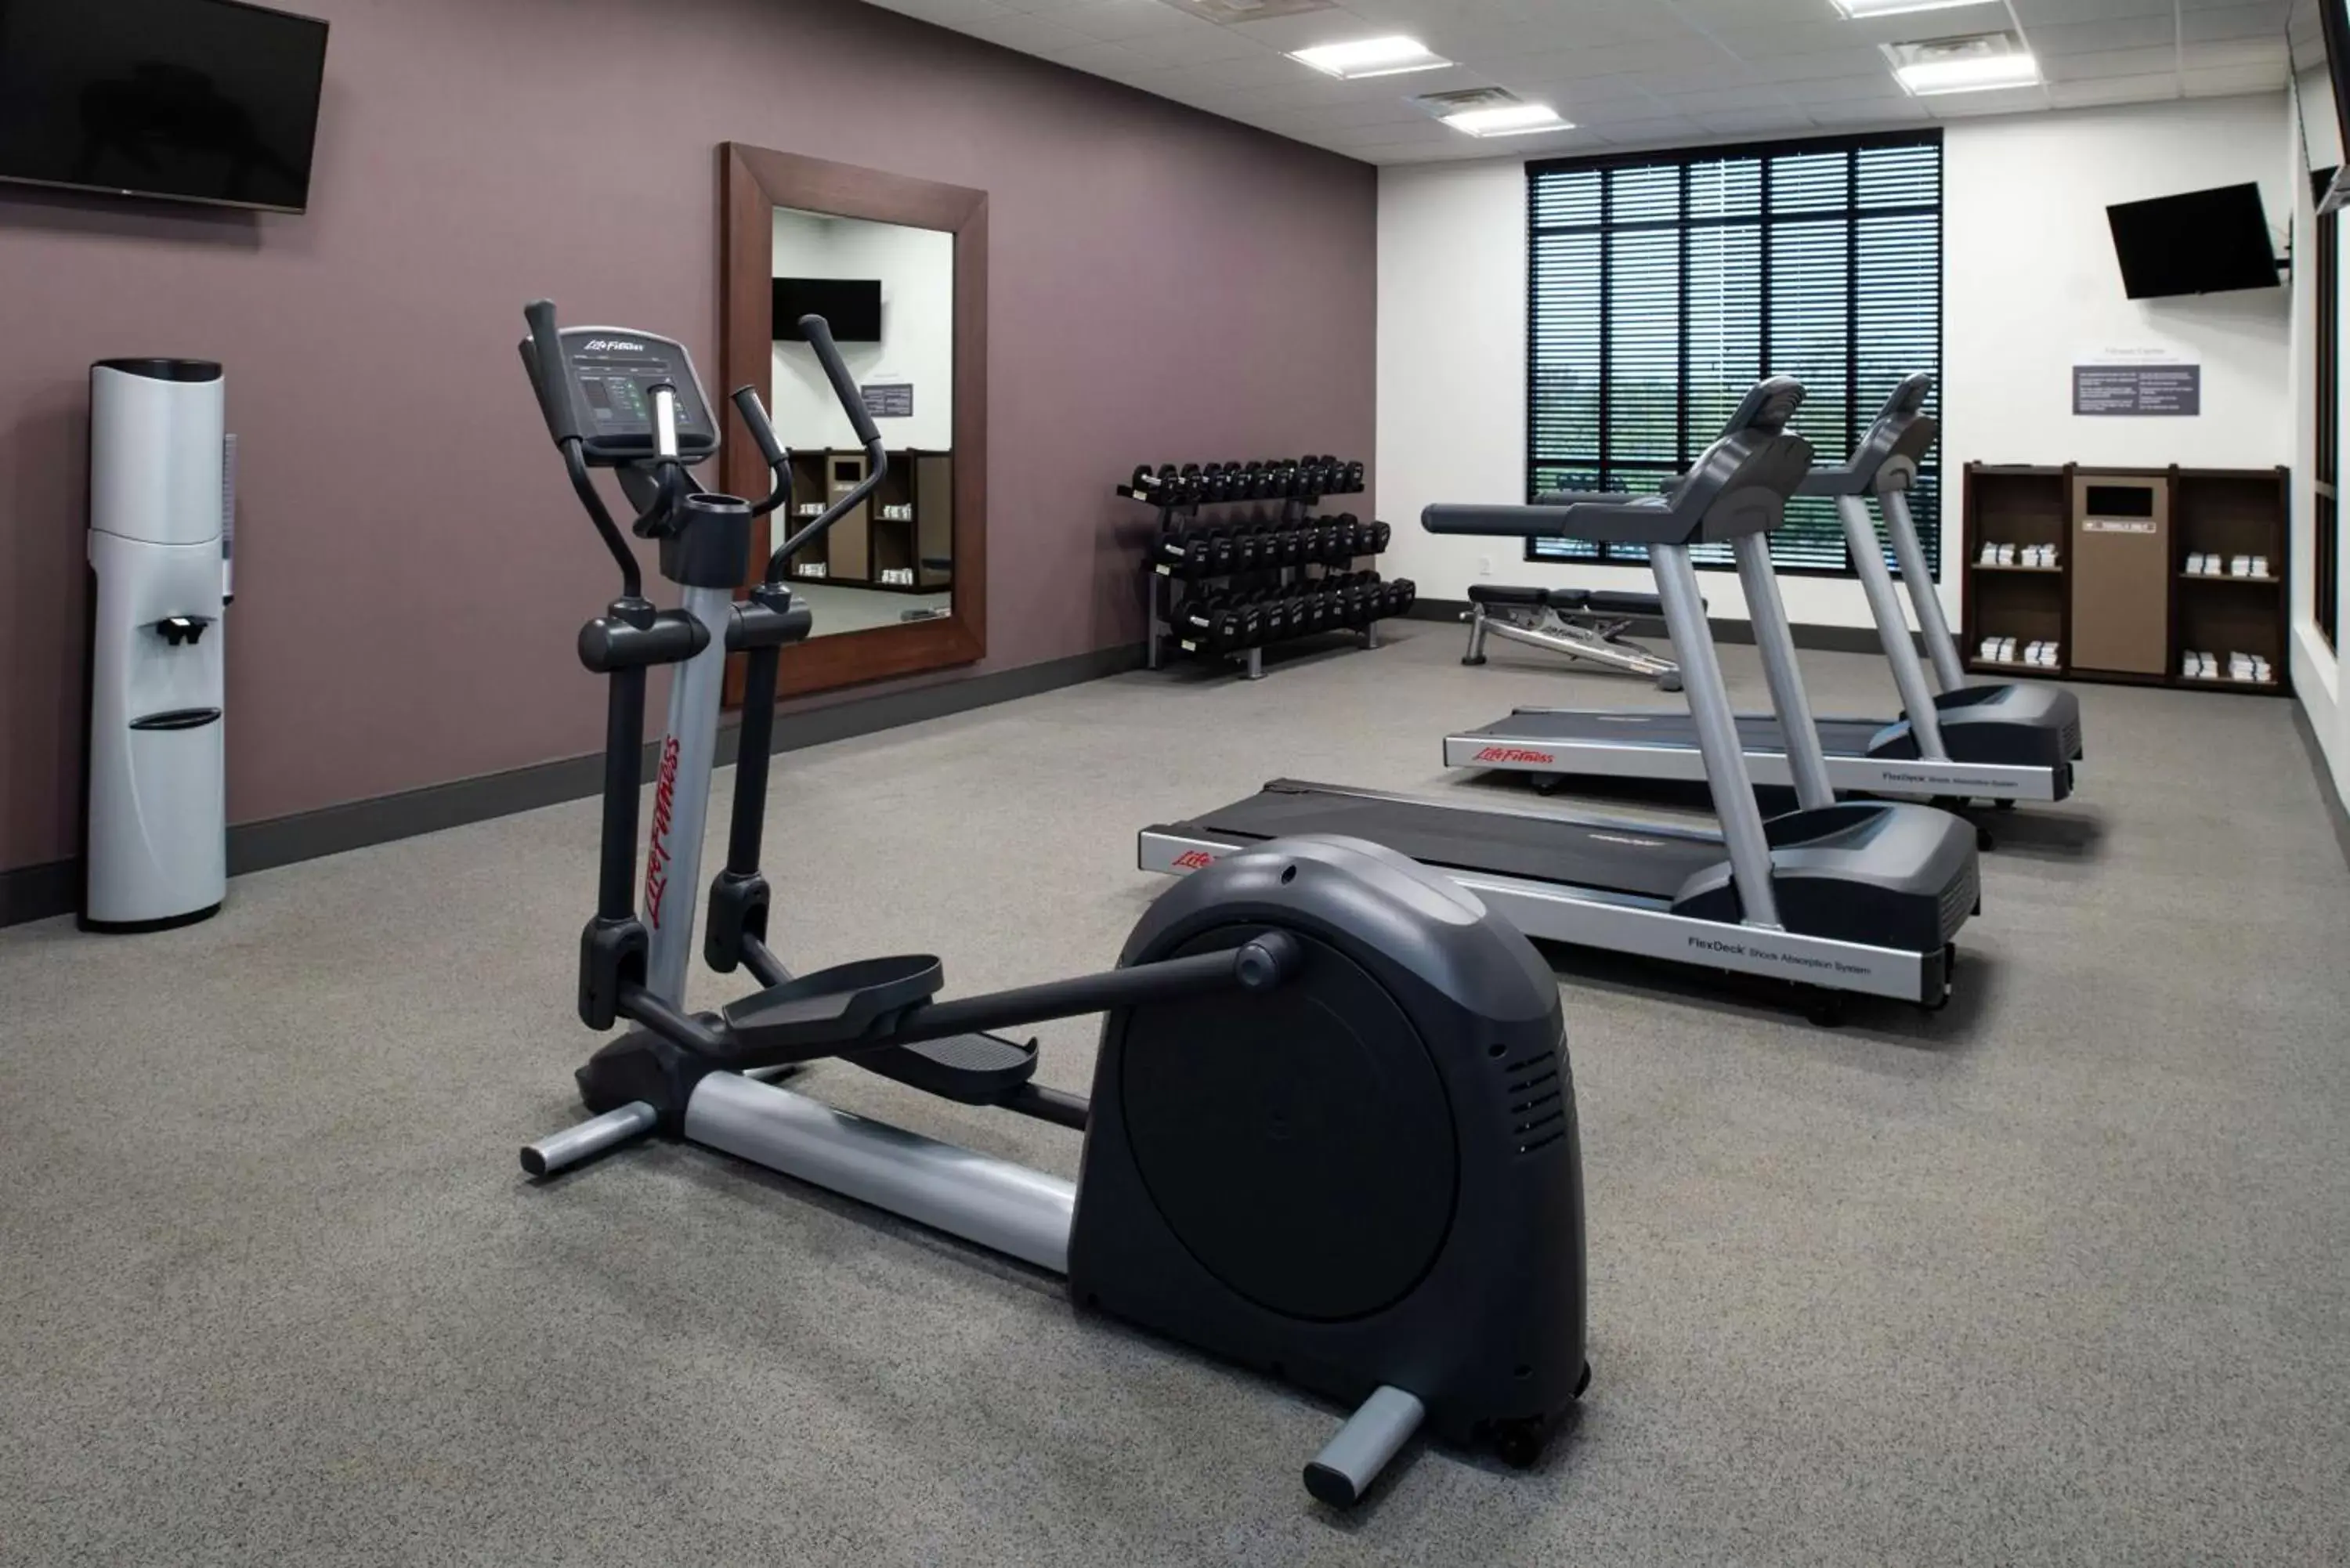 Fitness centre/facilities, Fitness Center/Facilities in Hilton Garden Inn Gallatin